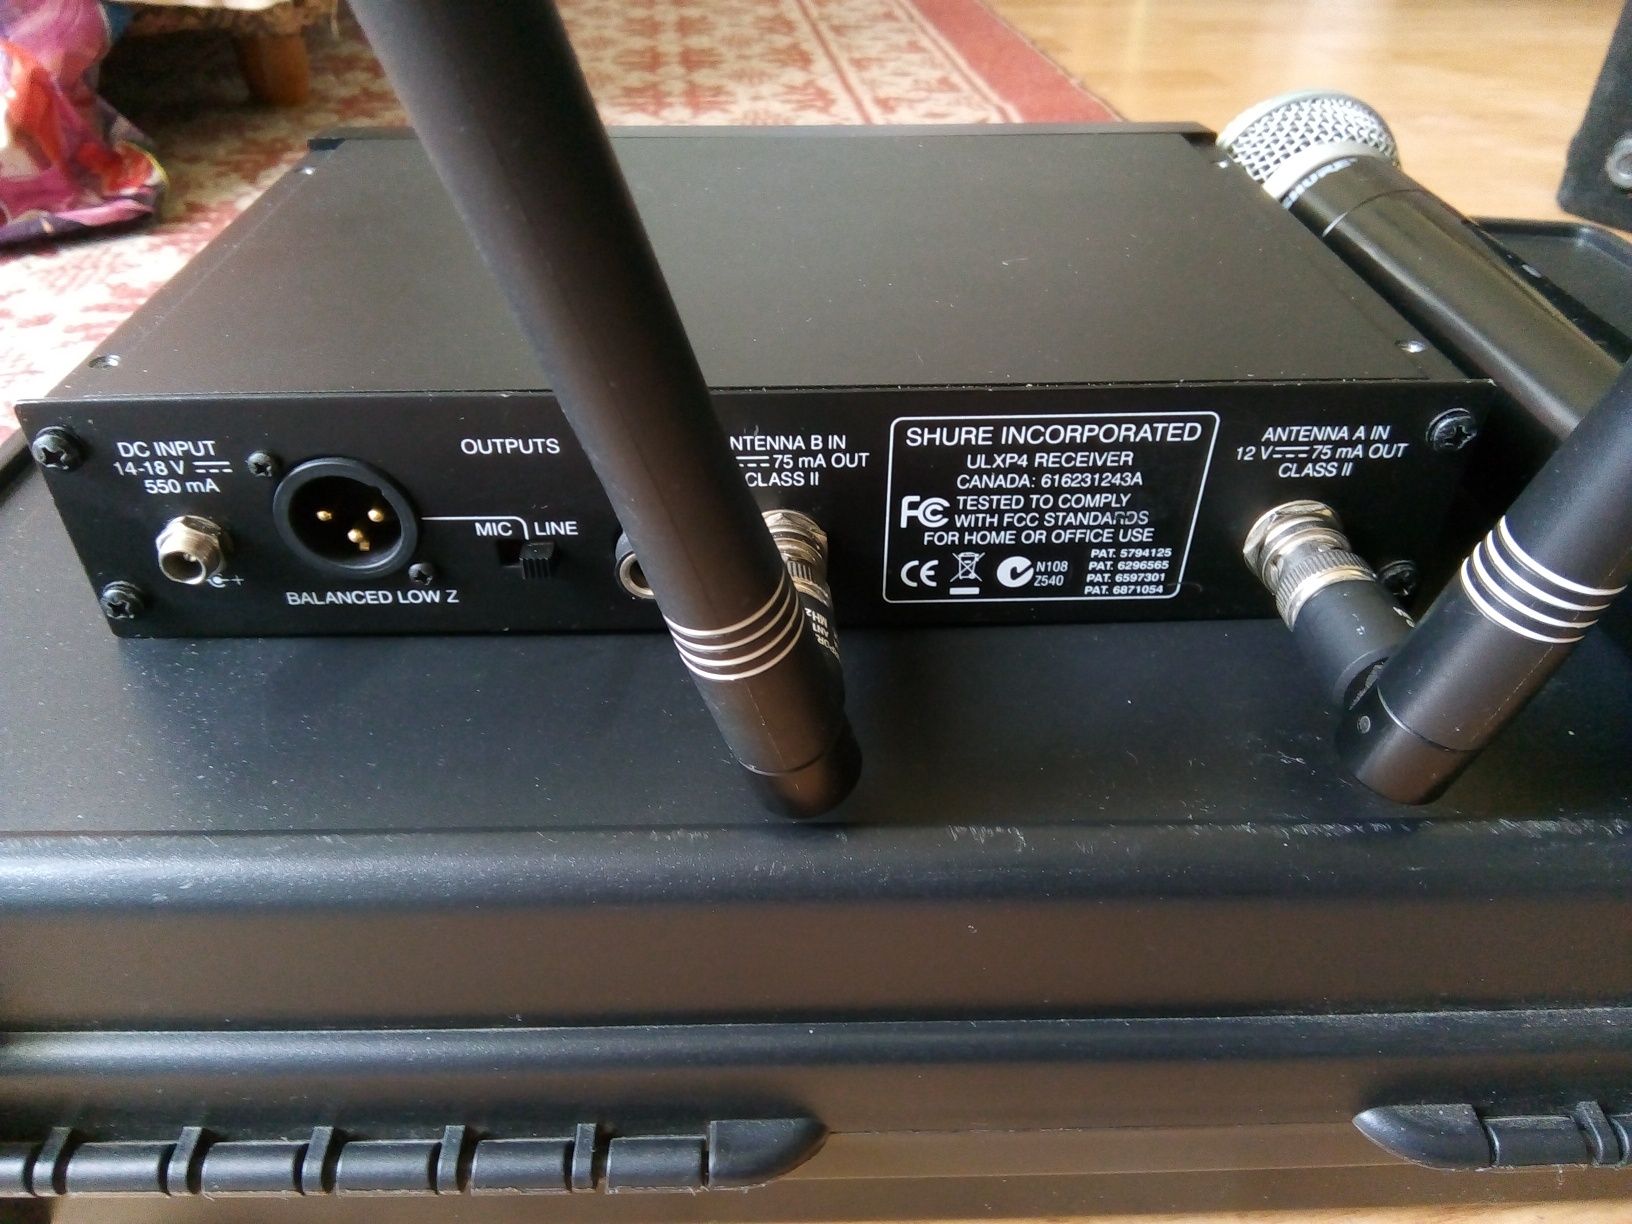 Microfon wireless Shure ulx P4 sennheiser akg